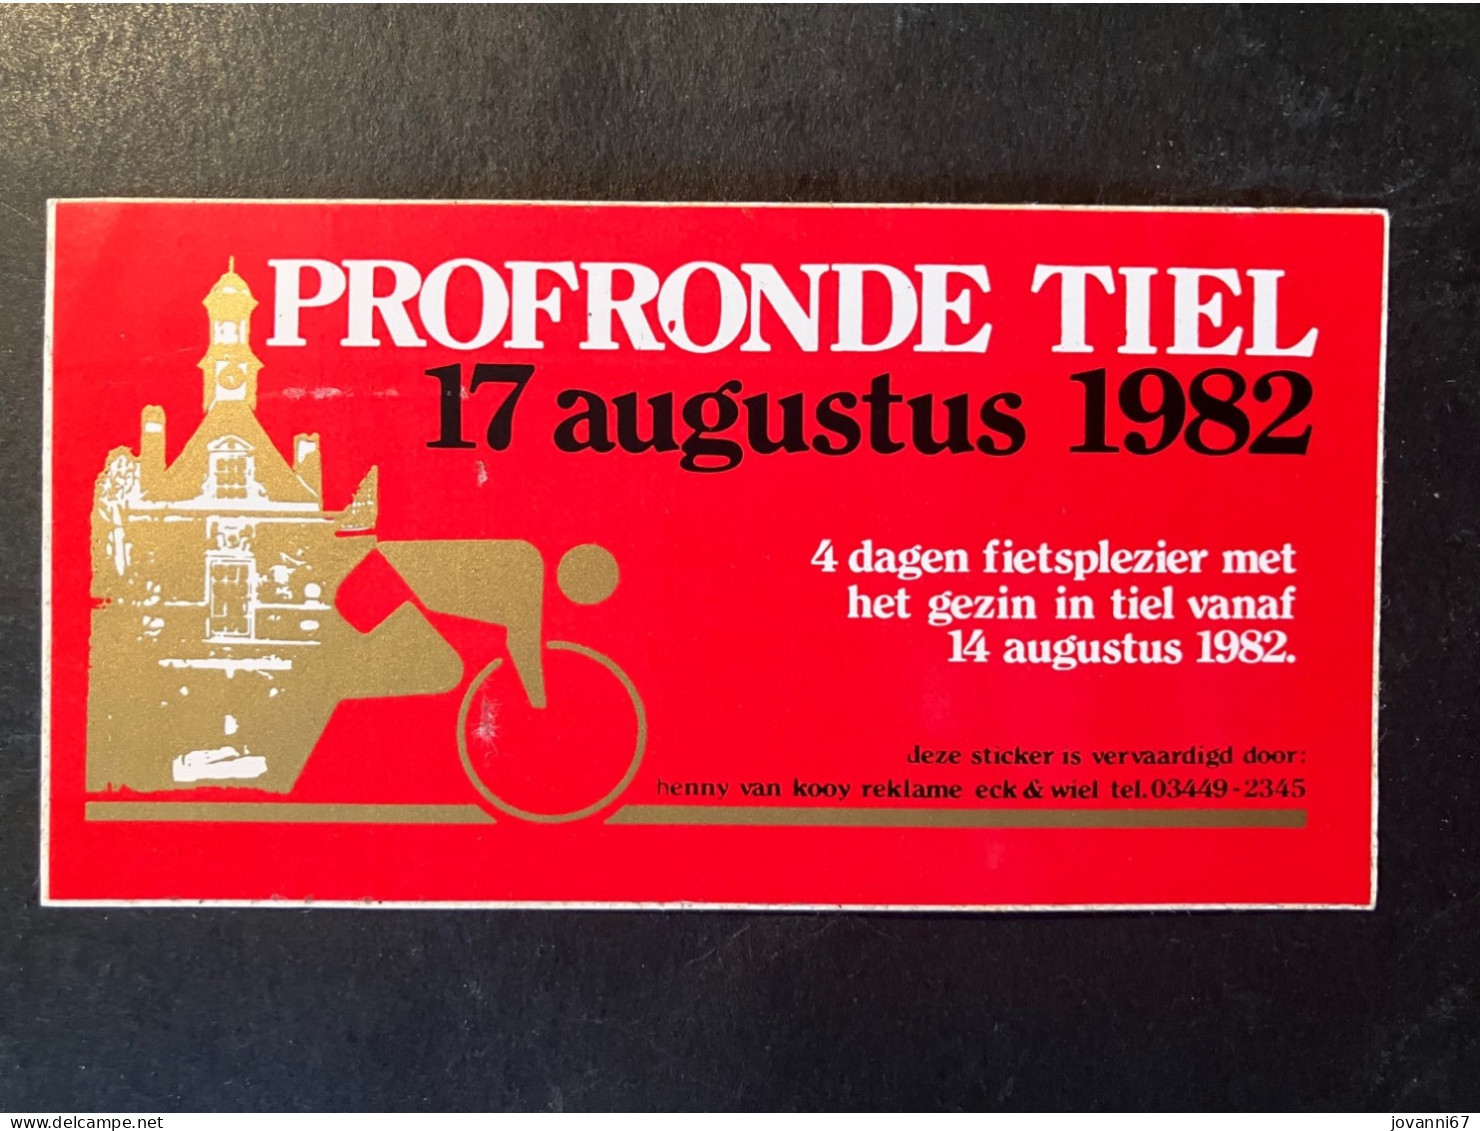 Profronde Tiel - Sticker - Cyclisme - Ciclismo -wielrennen - Cyclisme